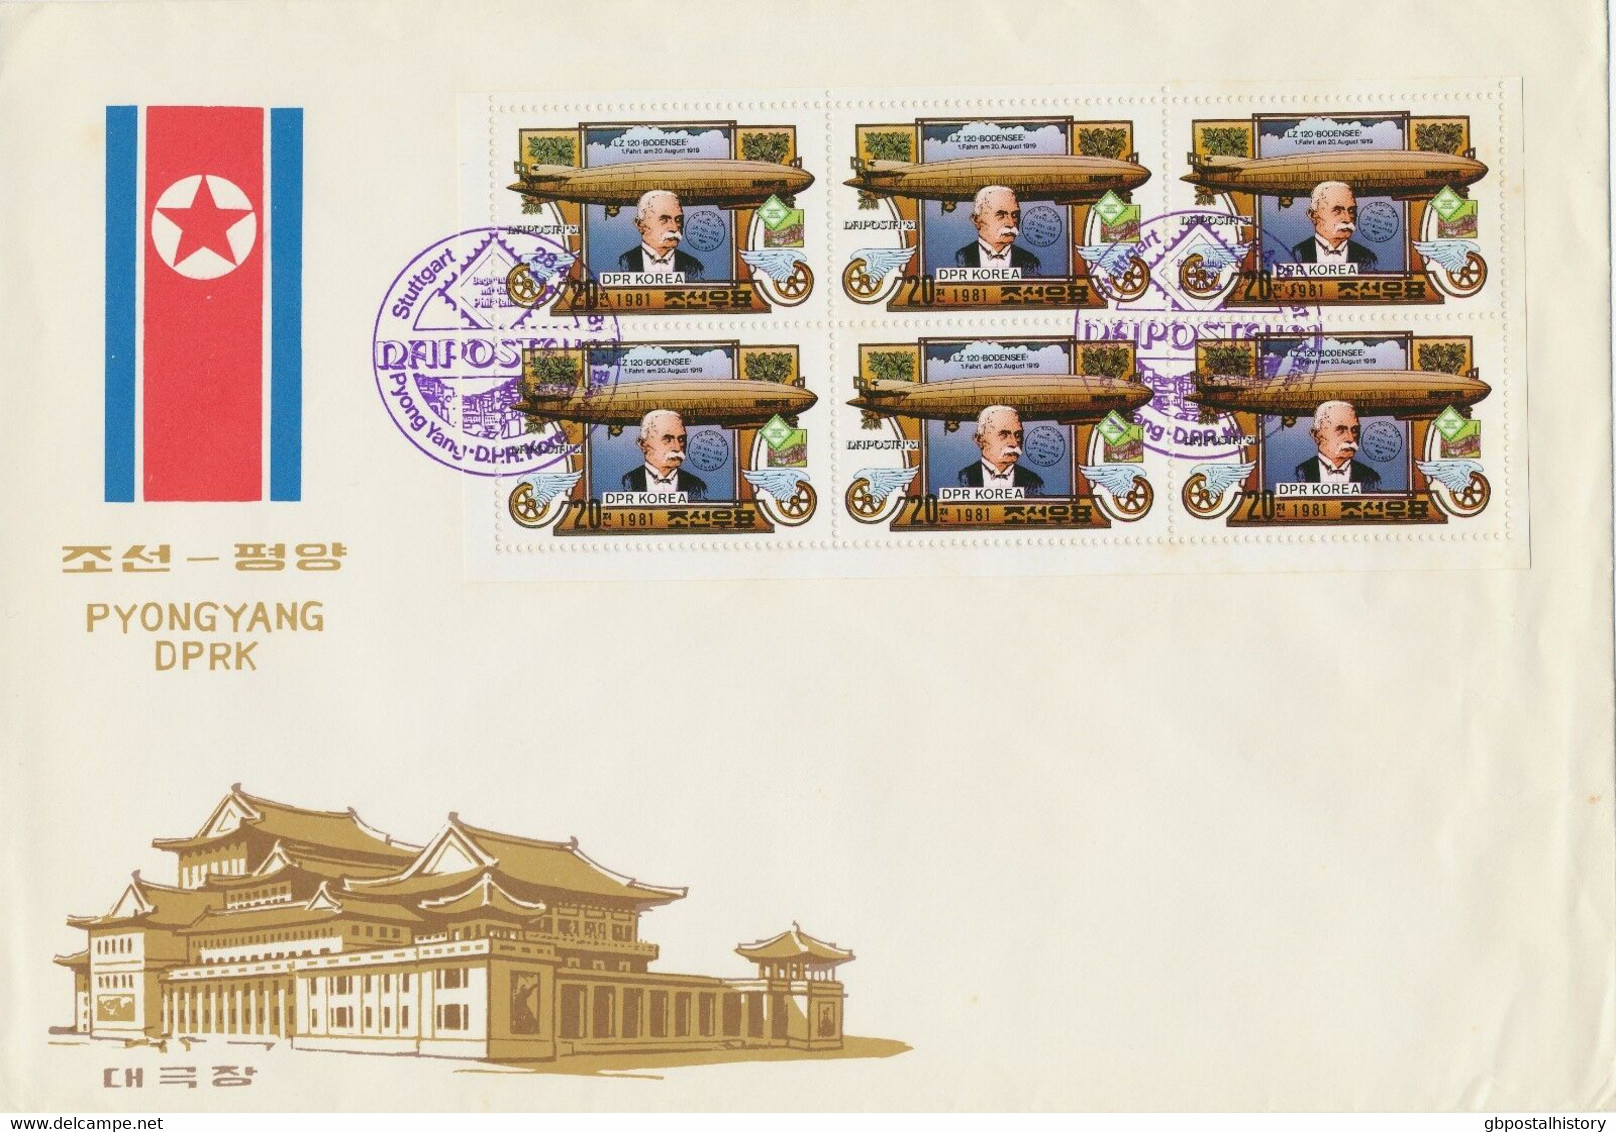 KOREA 1981 Briefmarkenausstellung NAPOSTA ’81, Stuttgart; 20 Ch Mfg. Klbg. FDC - Corée Du Nord